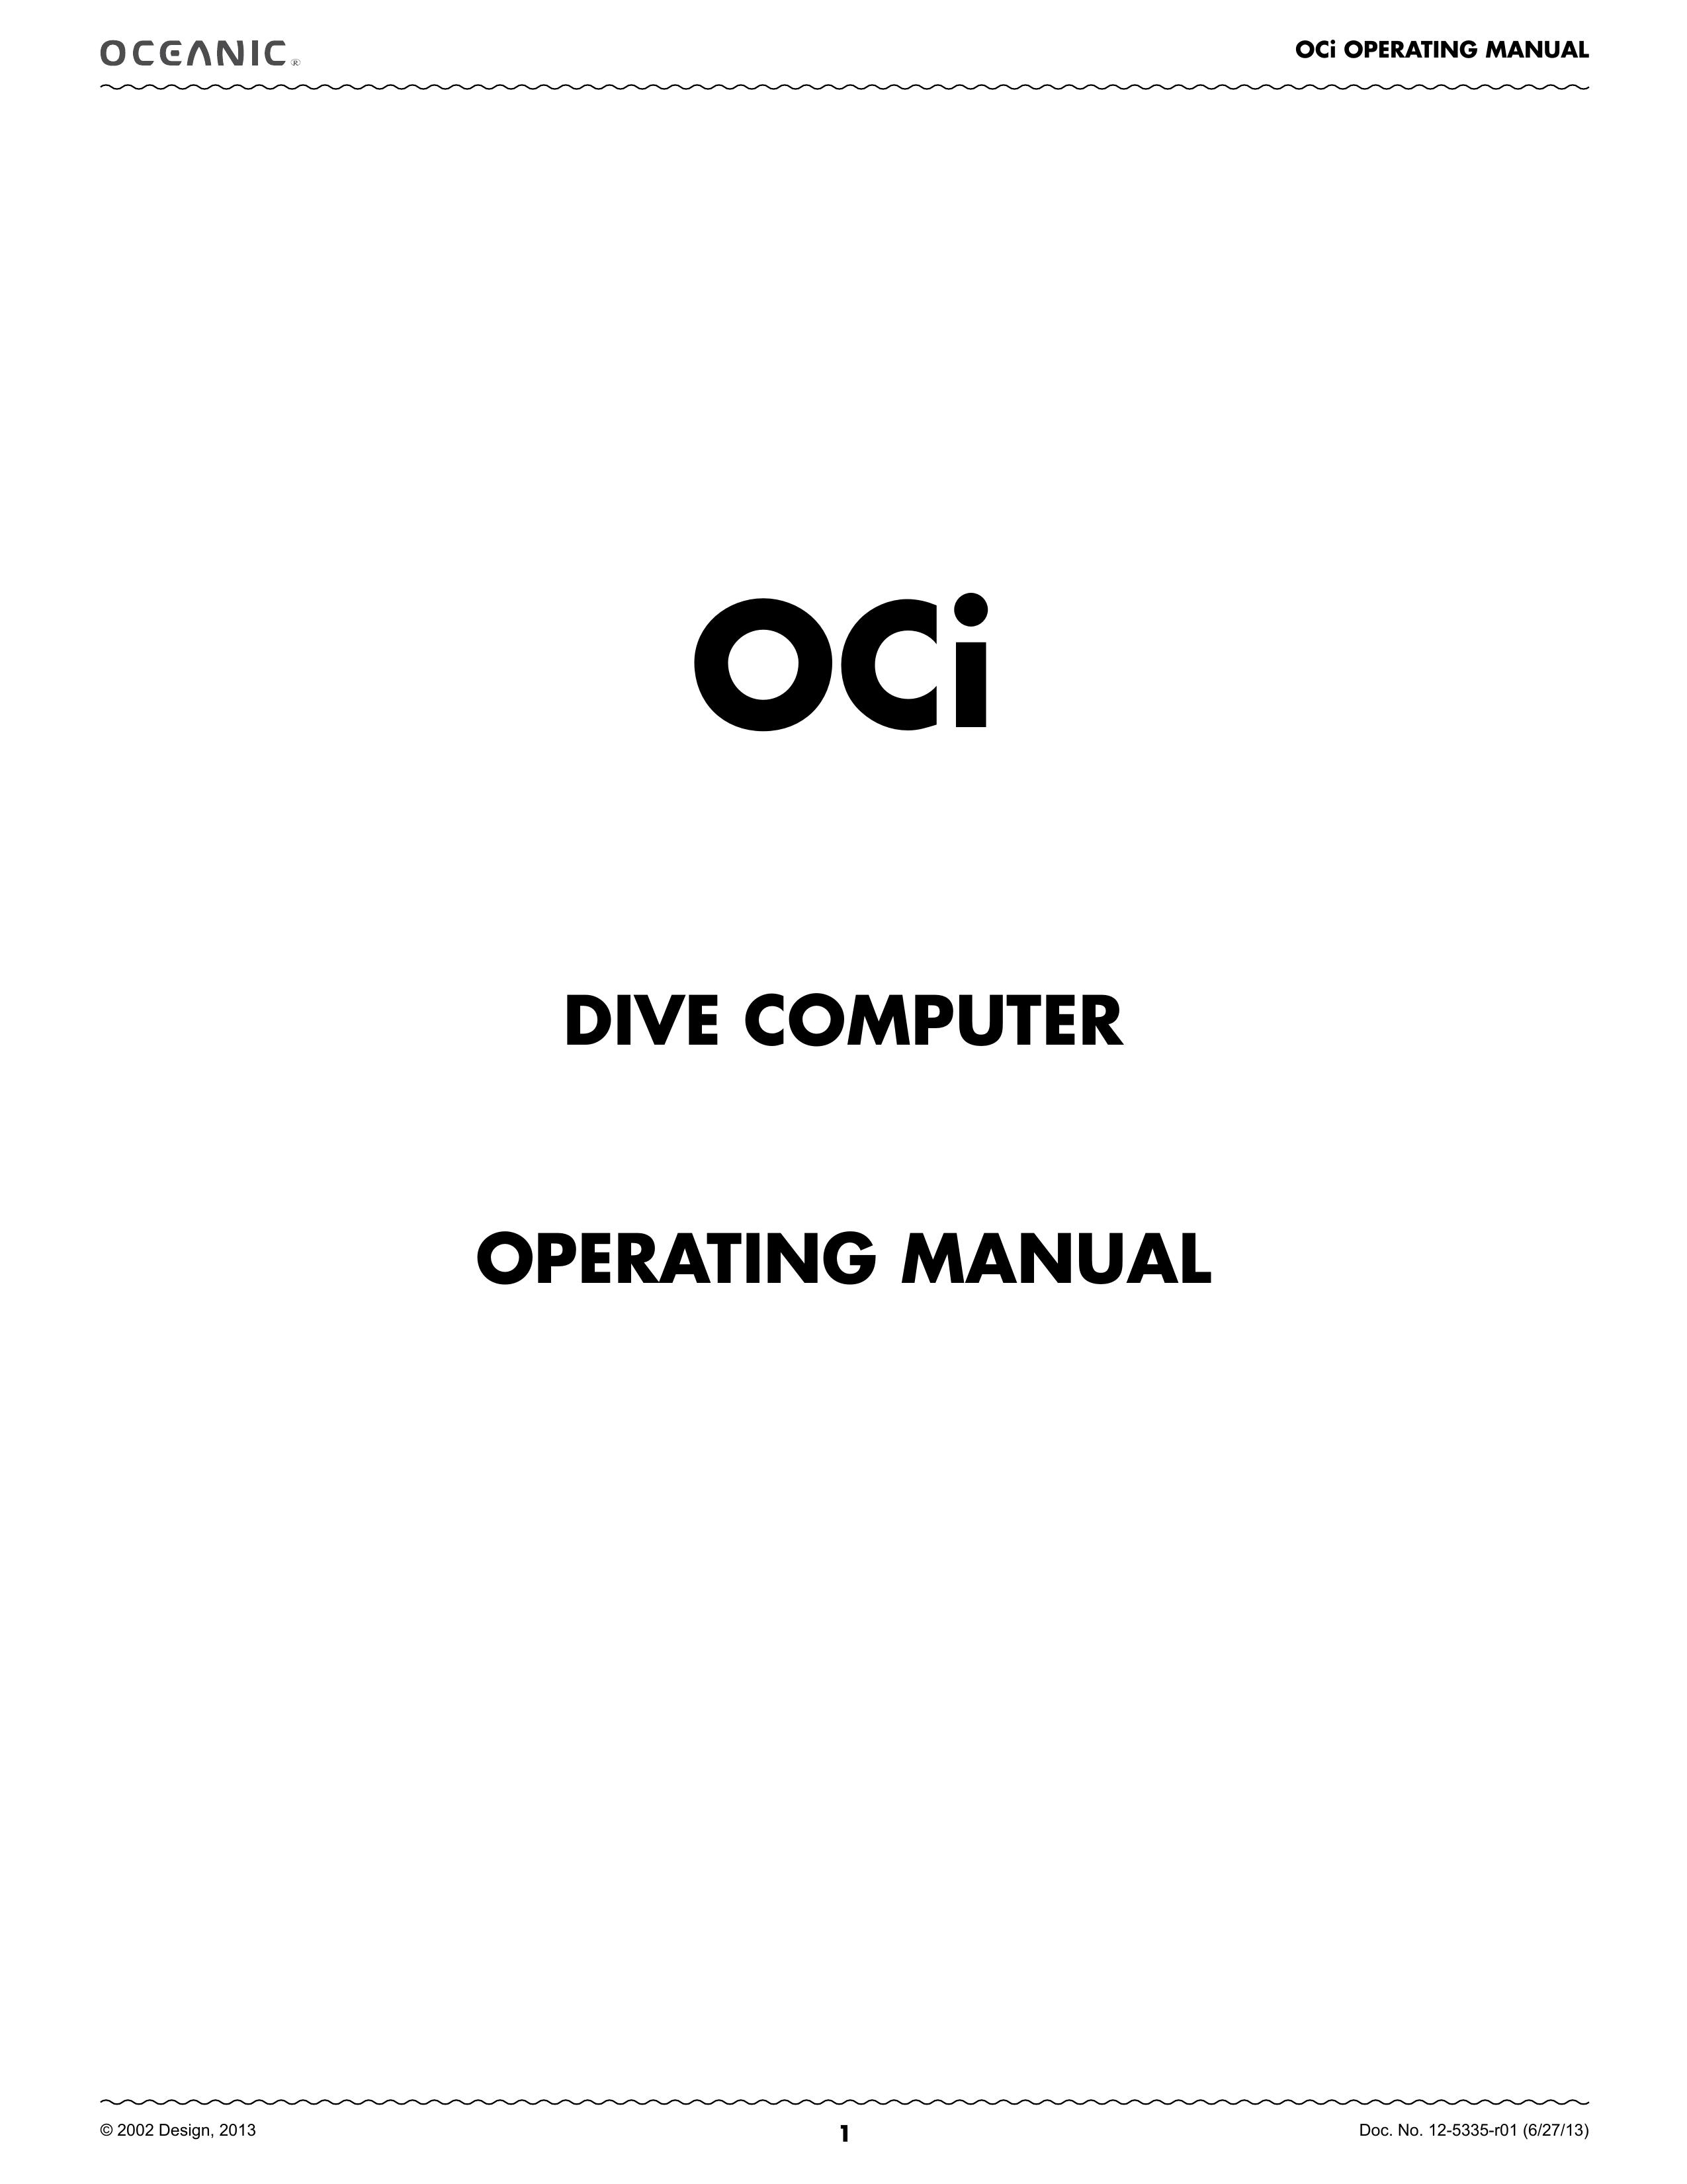 Oceanic 04-8791-49 Scuba Diving Equipment User Manual